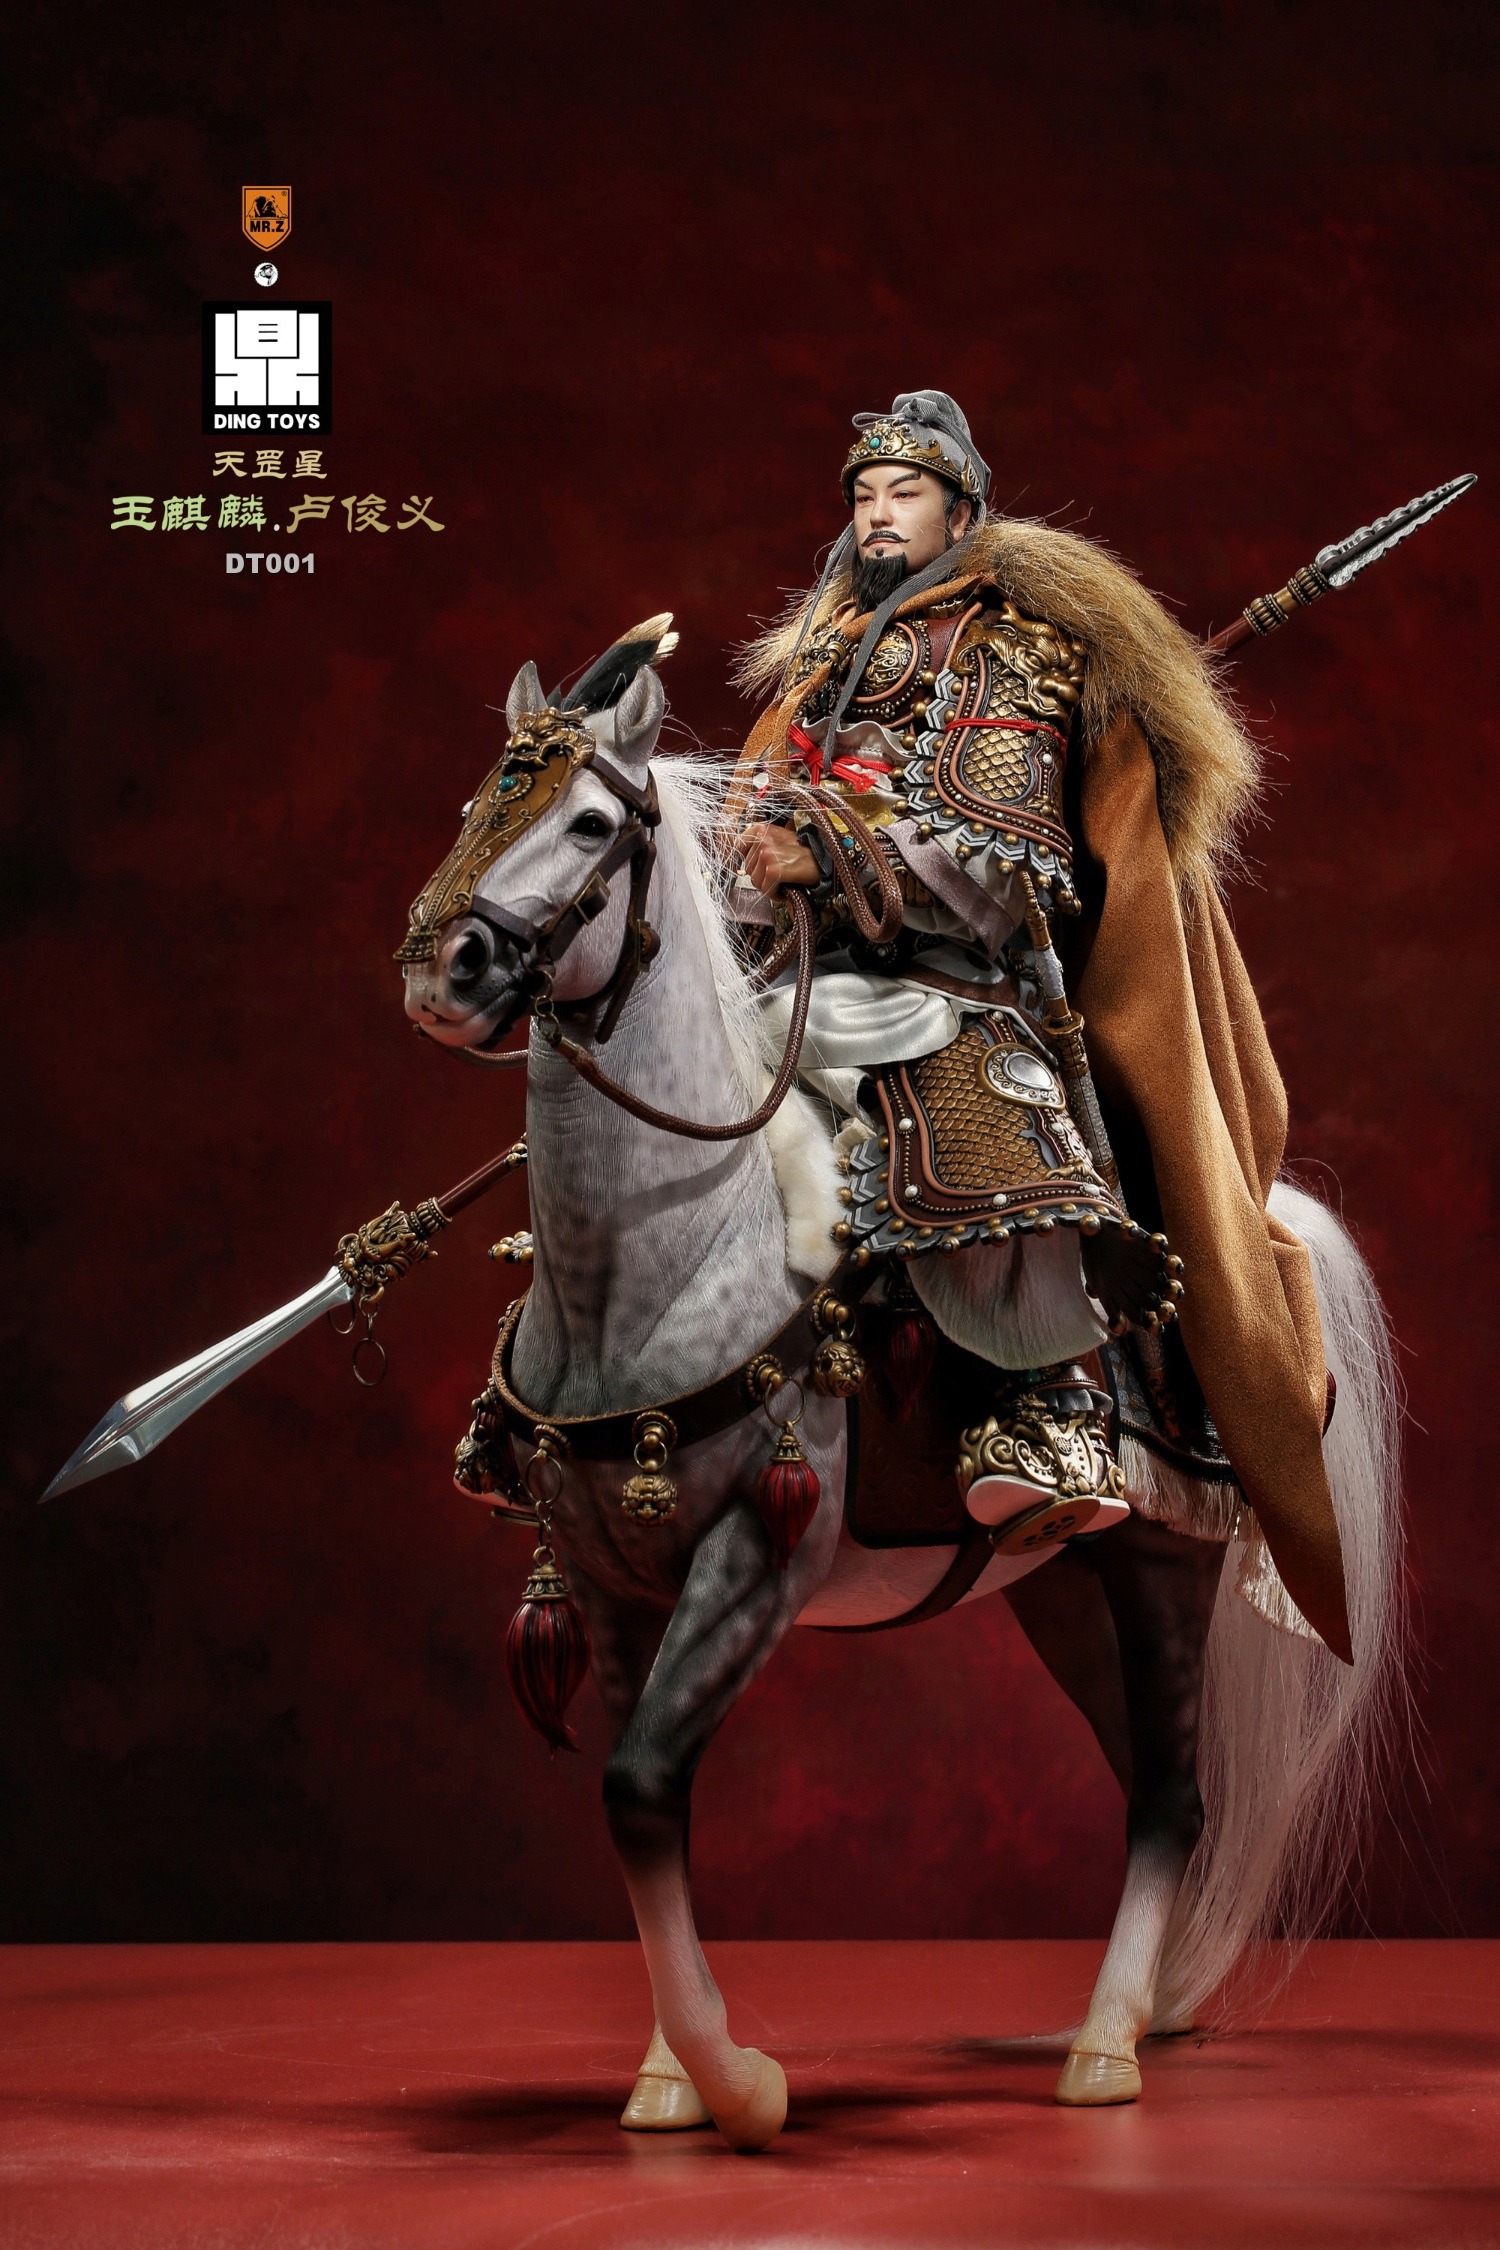 chinese - NEW PRODUCT: Mr.Z X DING TOYS - Tiangang Star Jade Qilin-Lu Junyi / war horse Qilin beast #DT001 0266